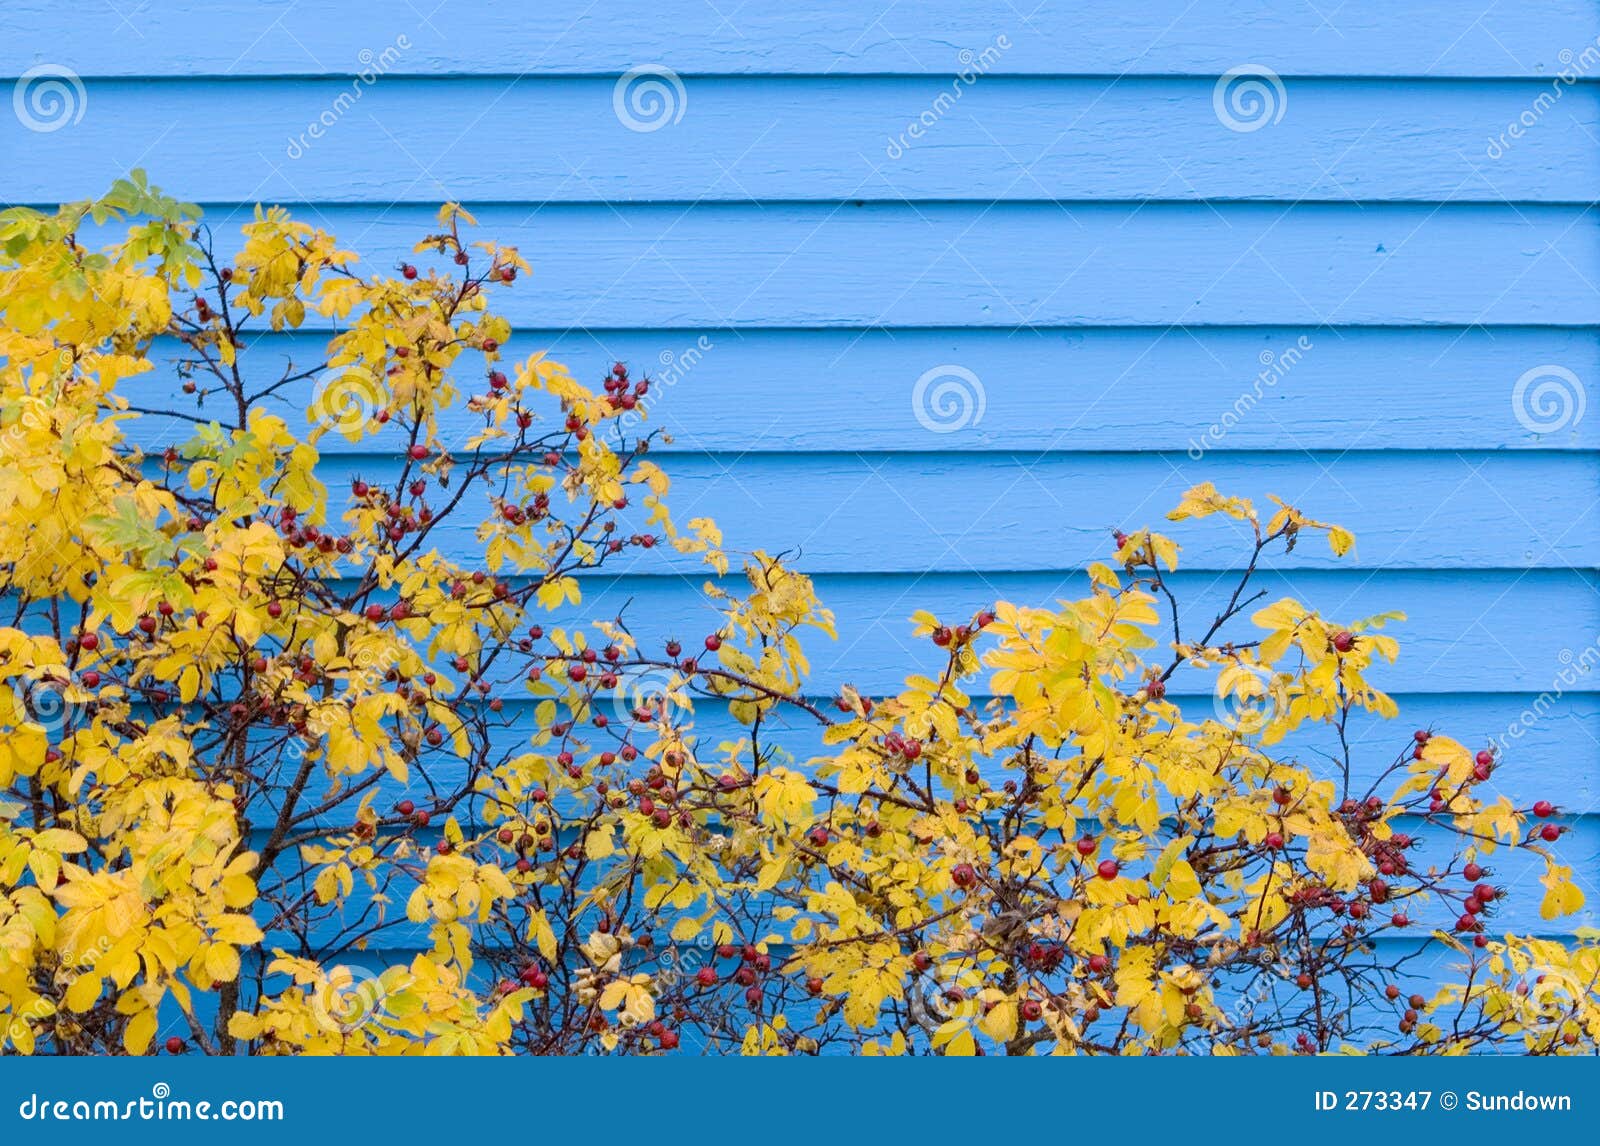 blue siding in autumn